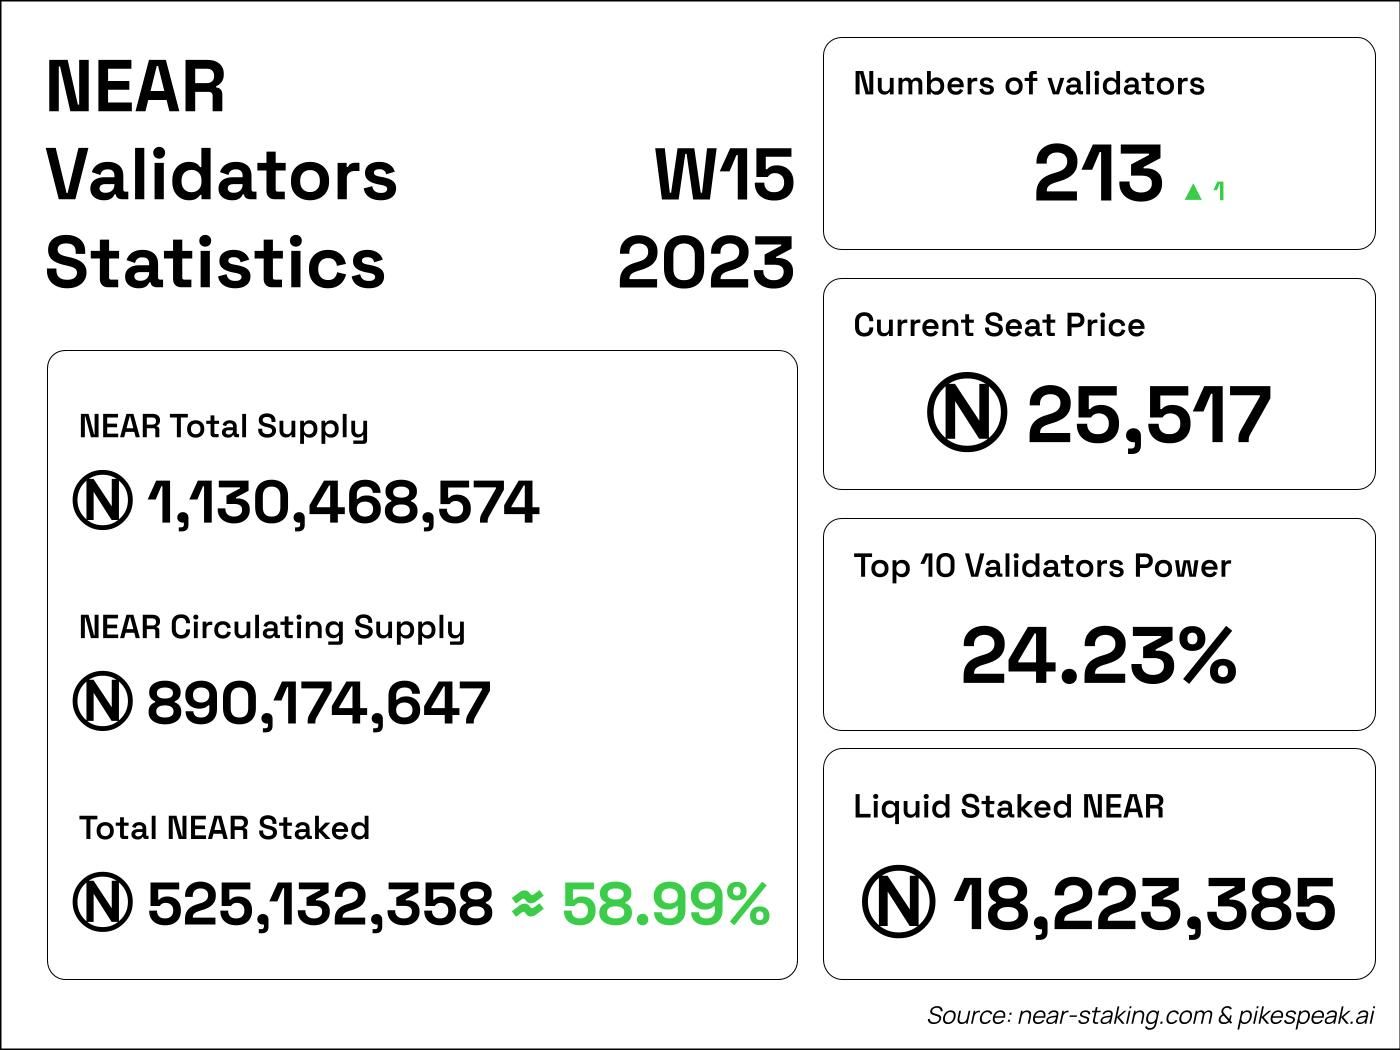 NEAR validators statistics week 15